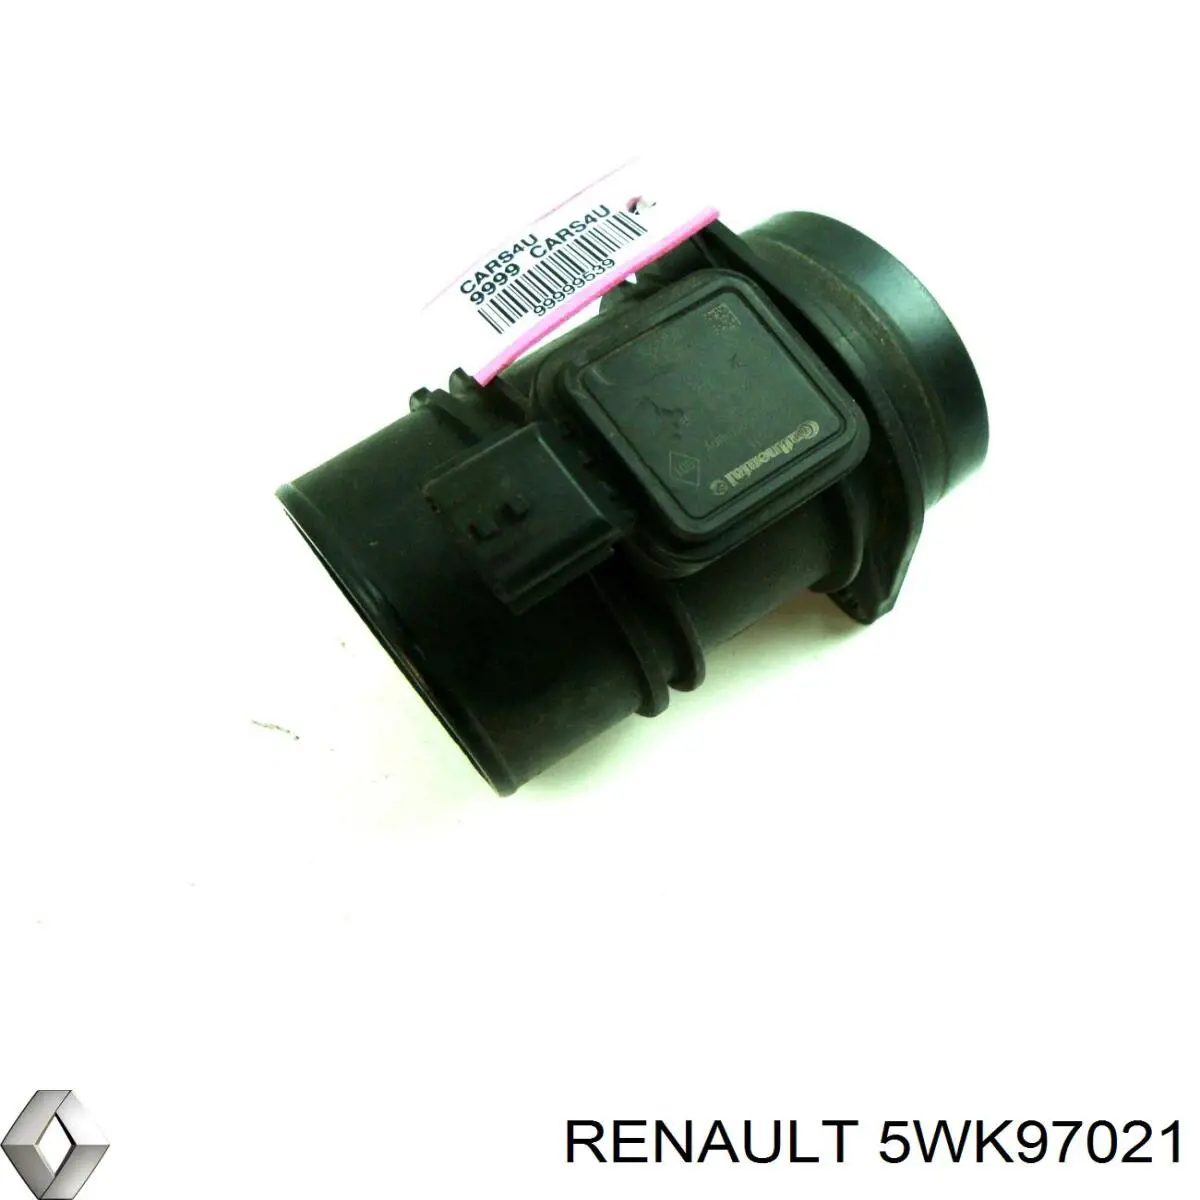 5WK97021 Renault (RVI) sensor de fluxo (consumo de ar, medidor de consumo M.A.F. - (Mass Airflow))